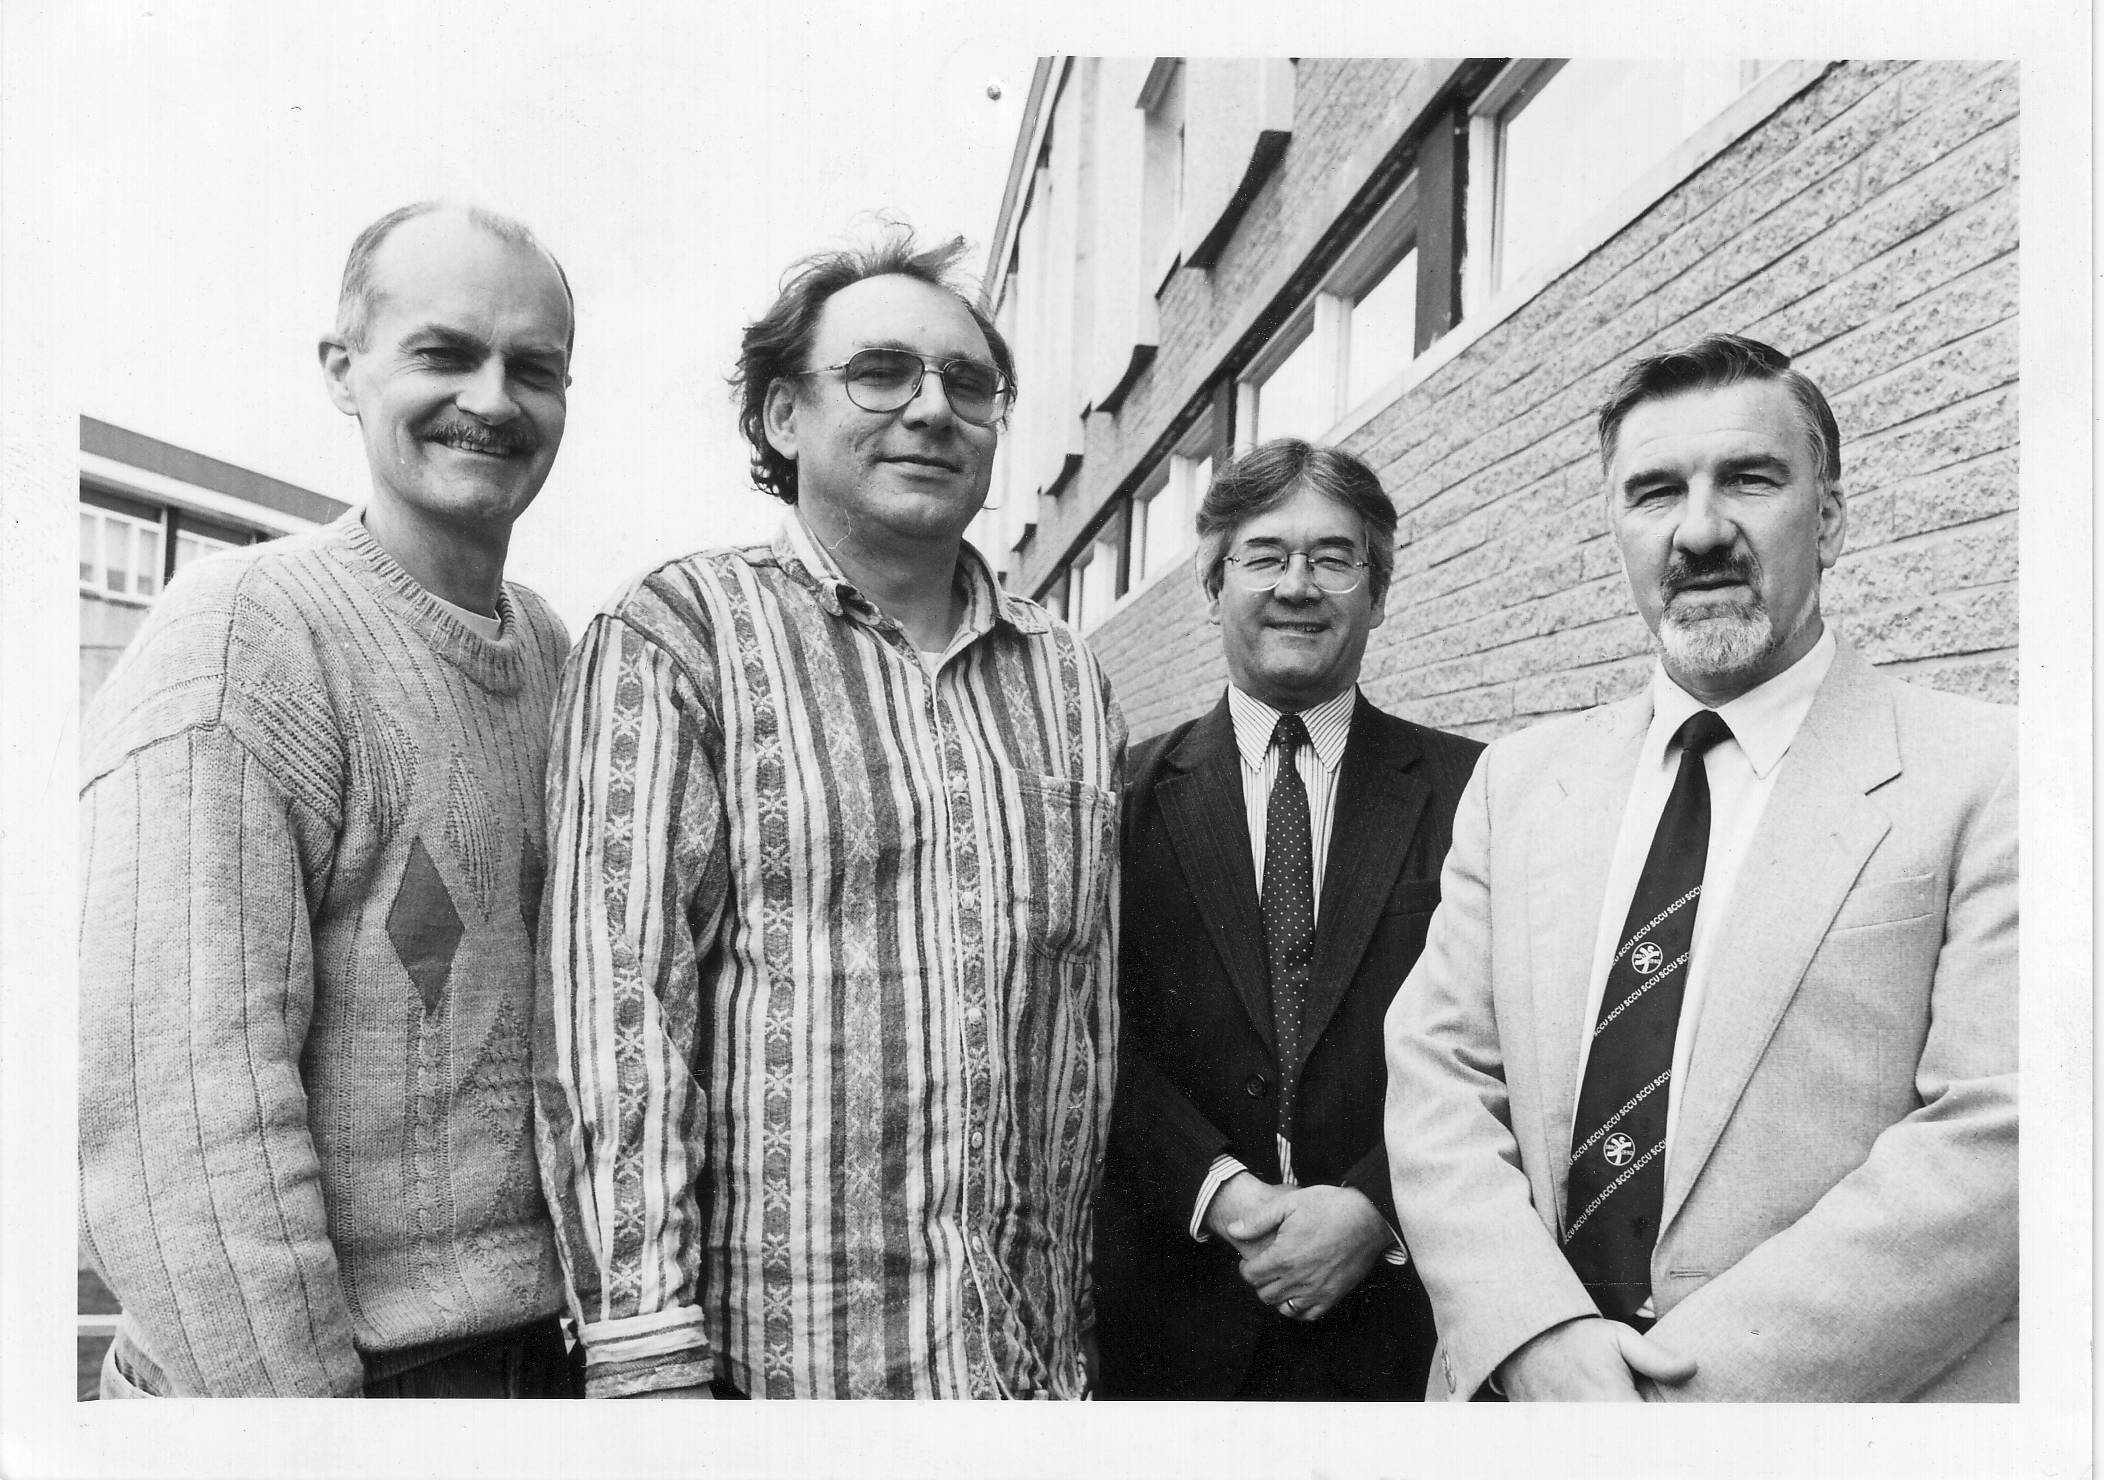 Mike Livesey, Jon Crowcroft, Tom Blyth (The Dean), Ron Morrison